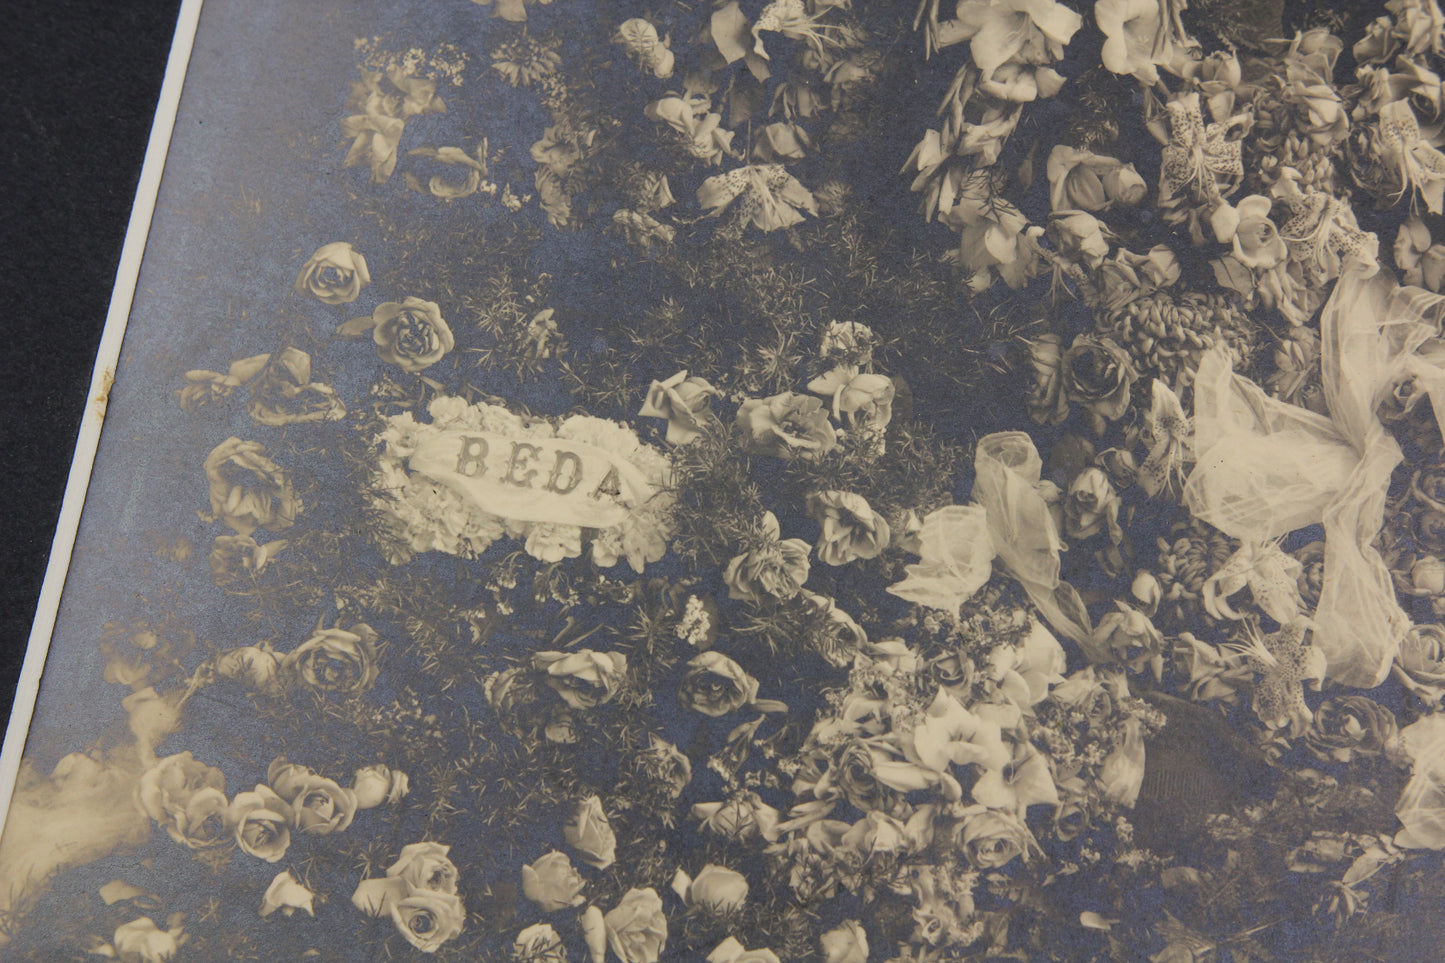 Antique Matted Funeral Flower Arrangement Photograph for Beda, Daughter & Sister